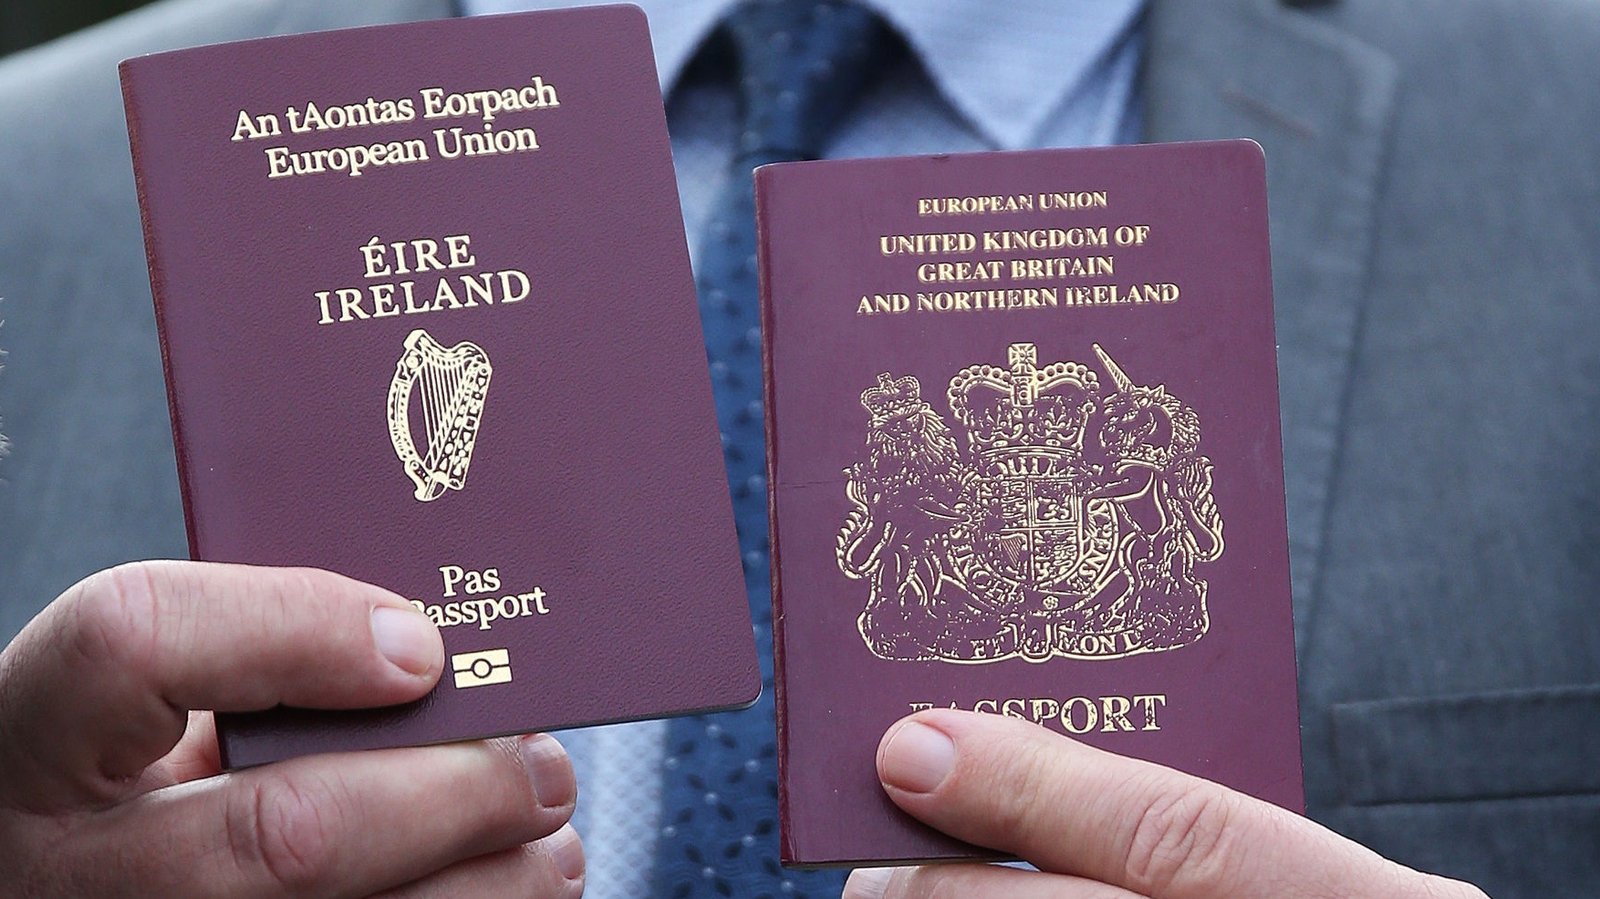 68 rise in UK applications for Irish passports